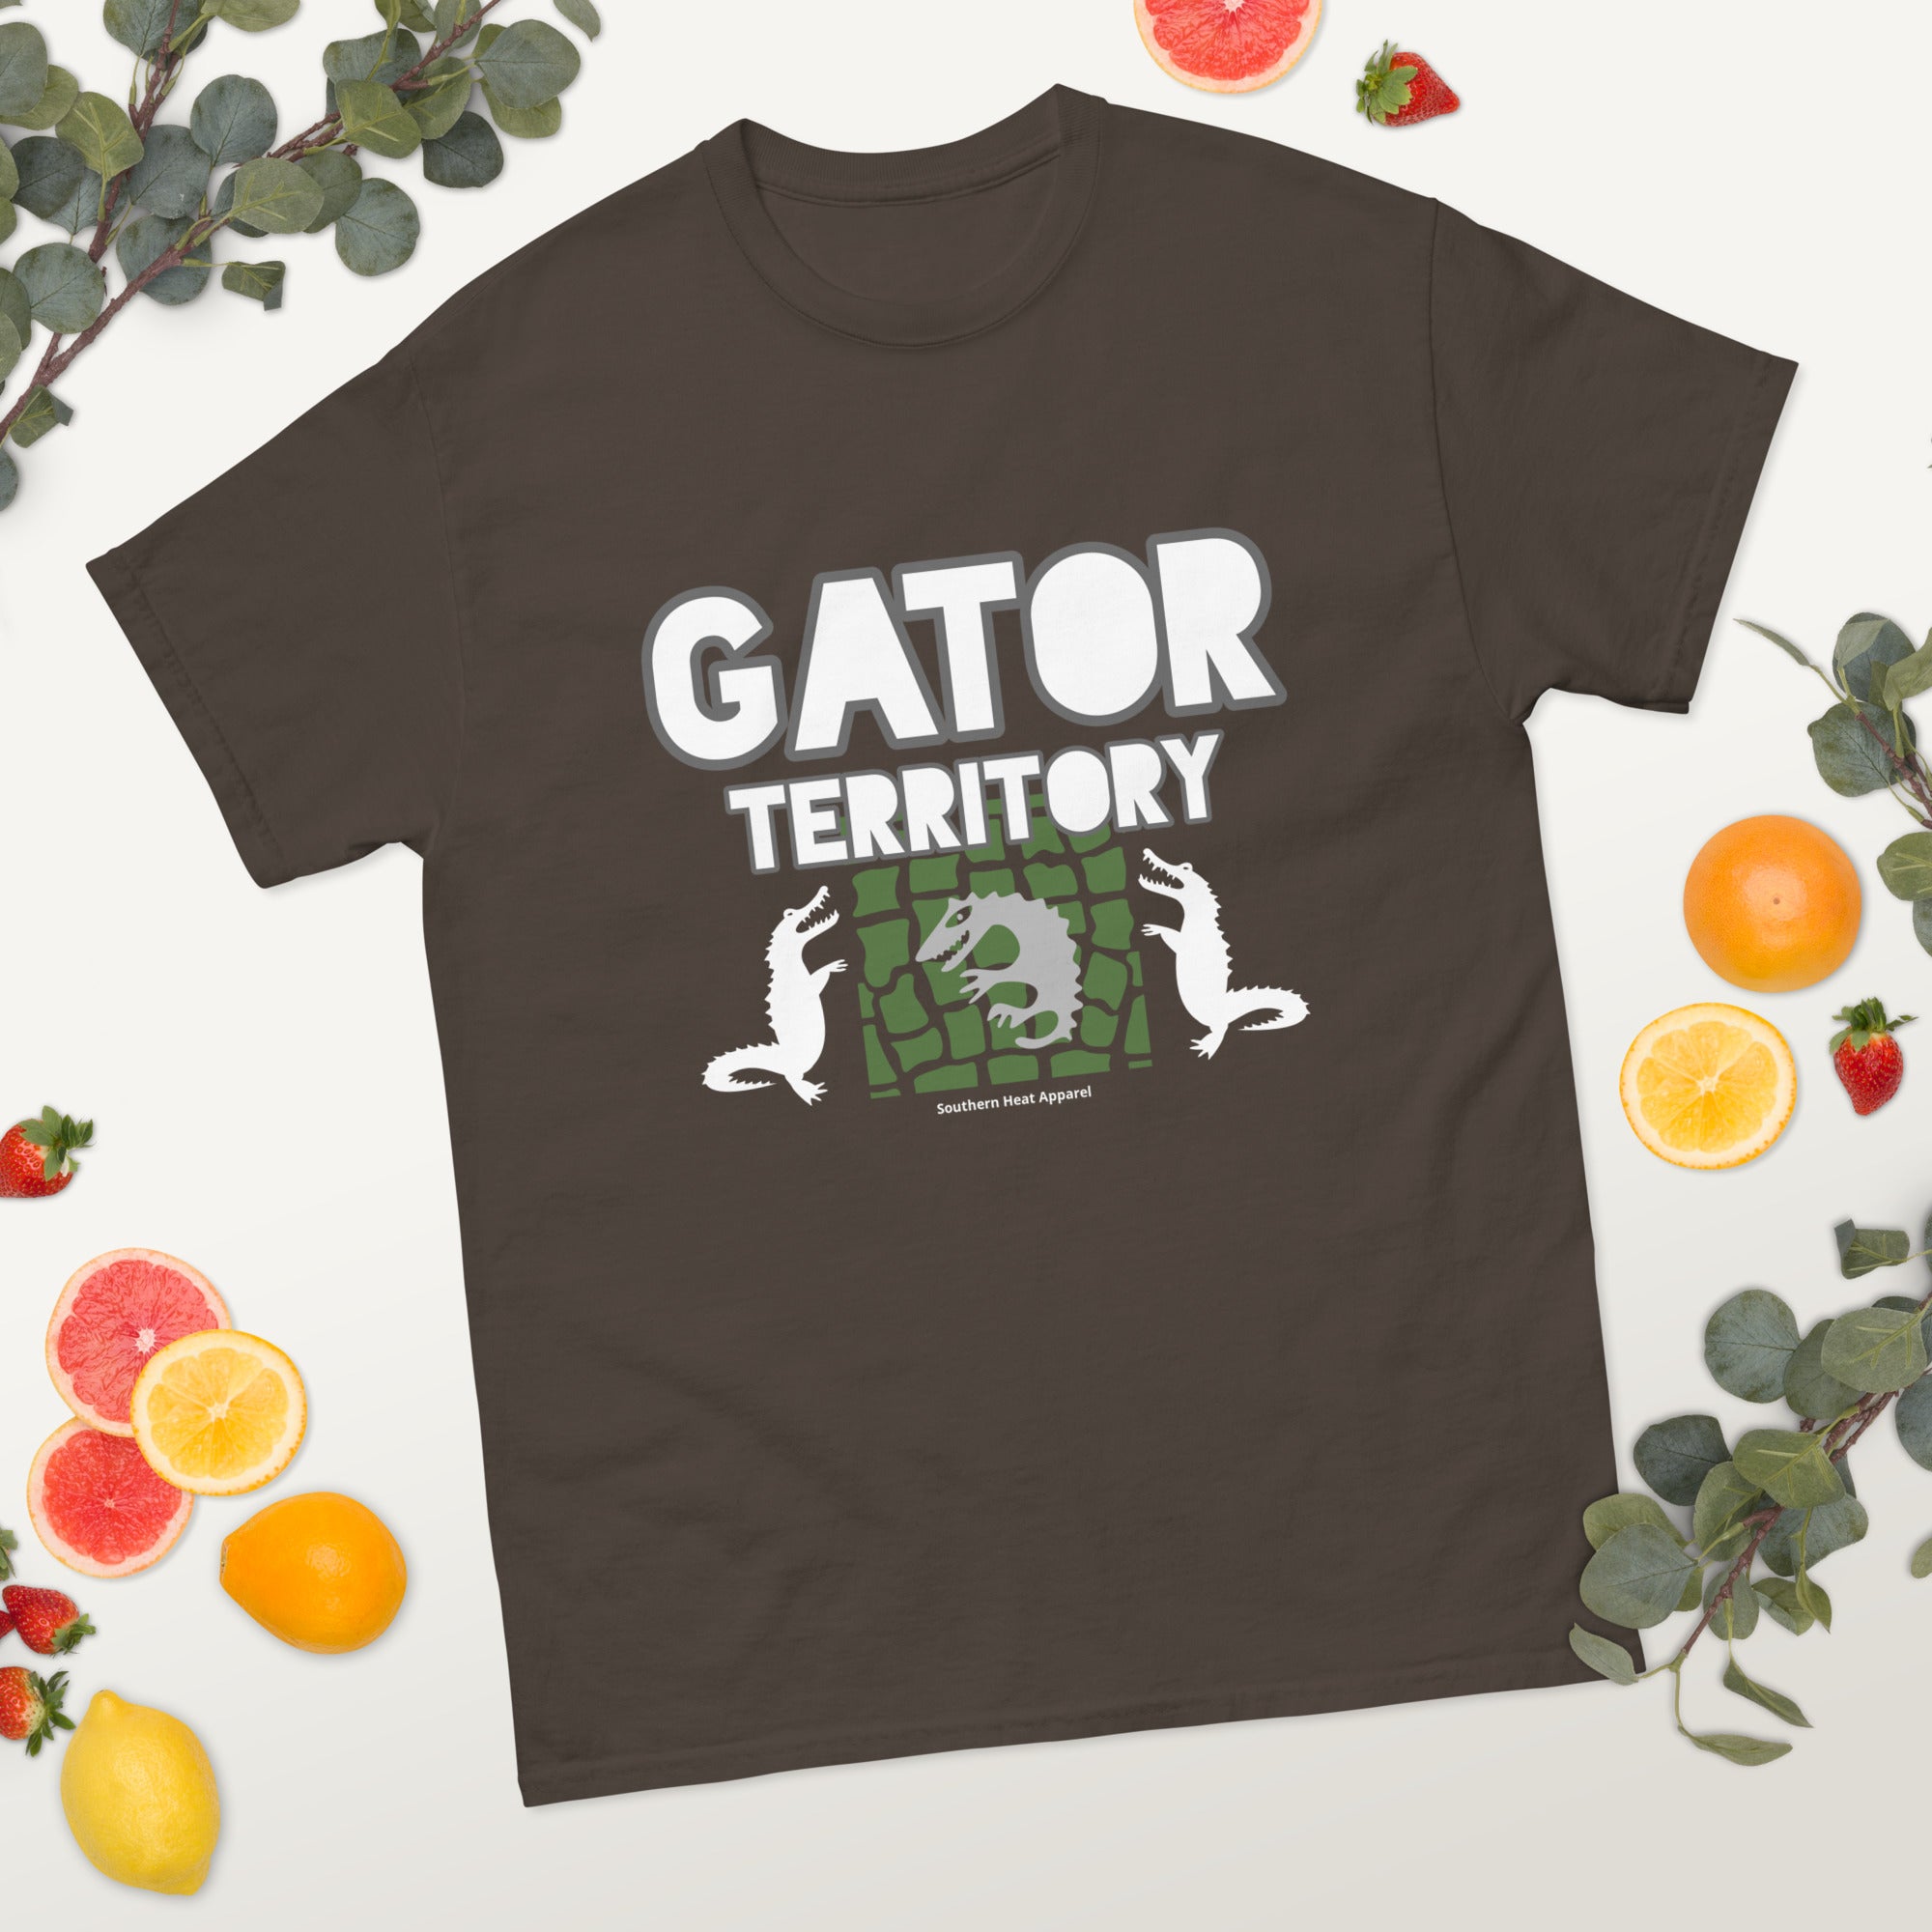 Gator Territory-Men's classic tee